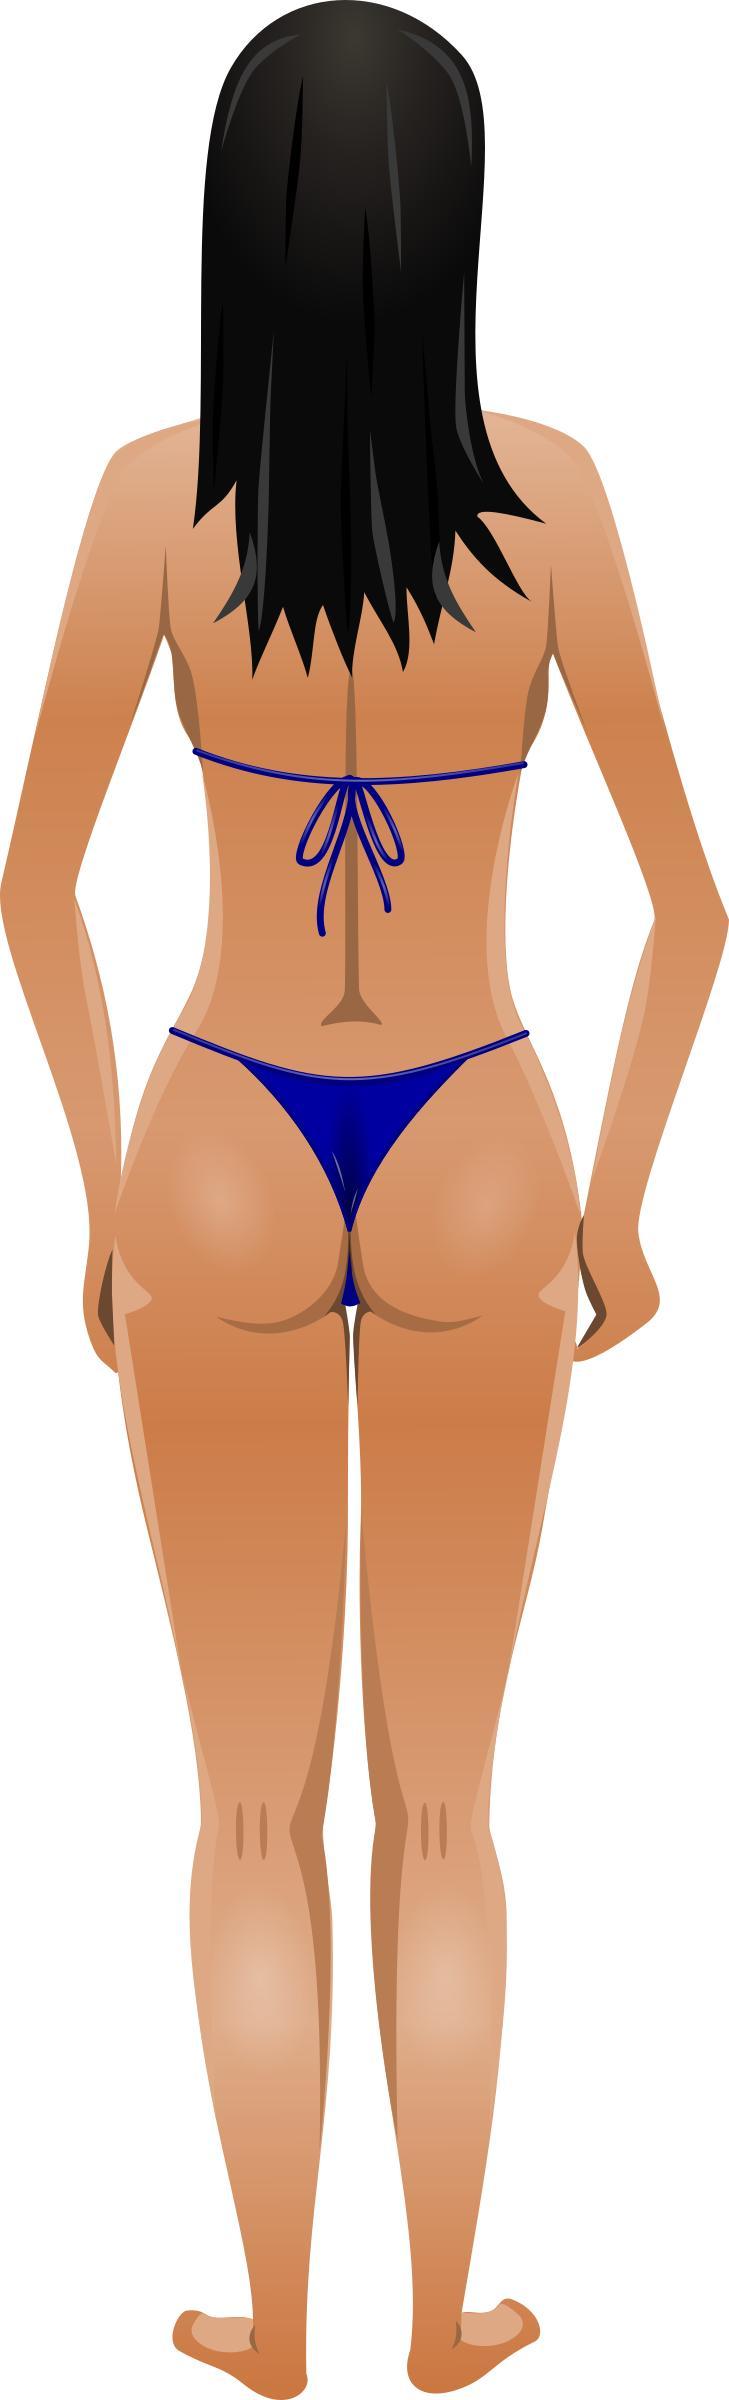 Young lady (light skin, blue bikini, black hair) png transparent